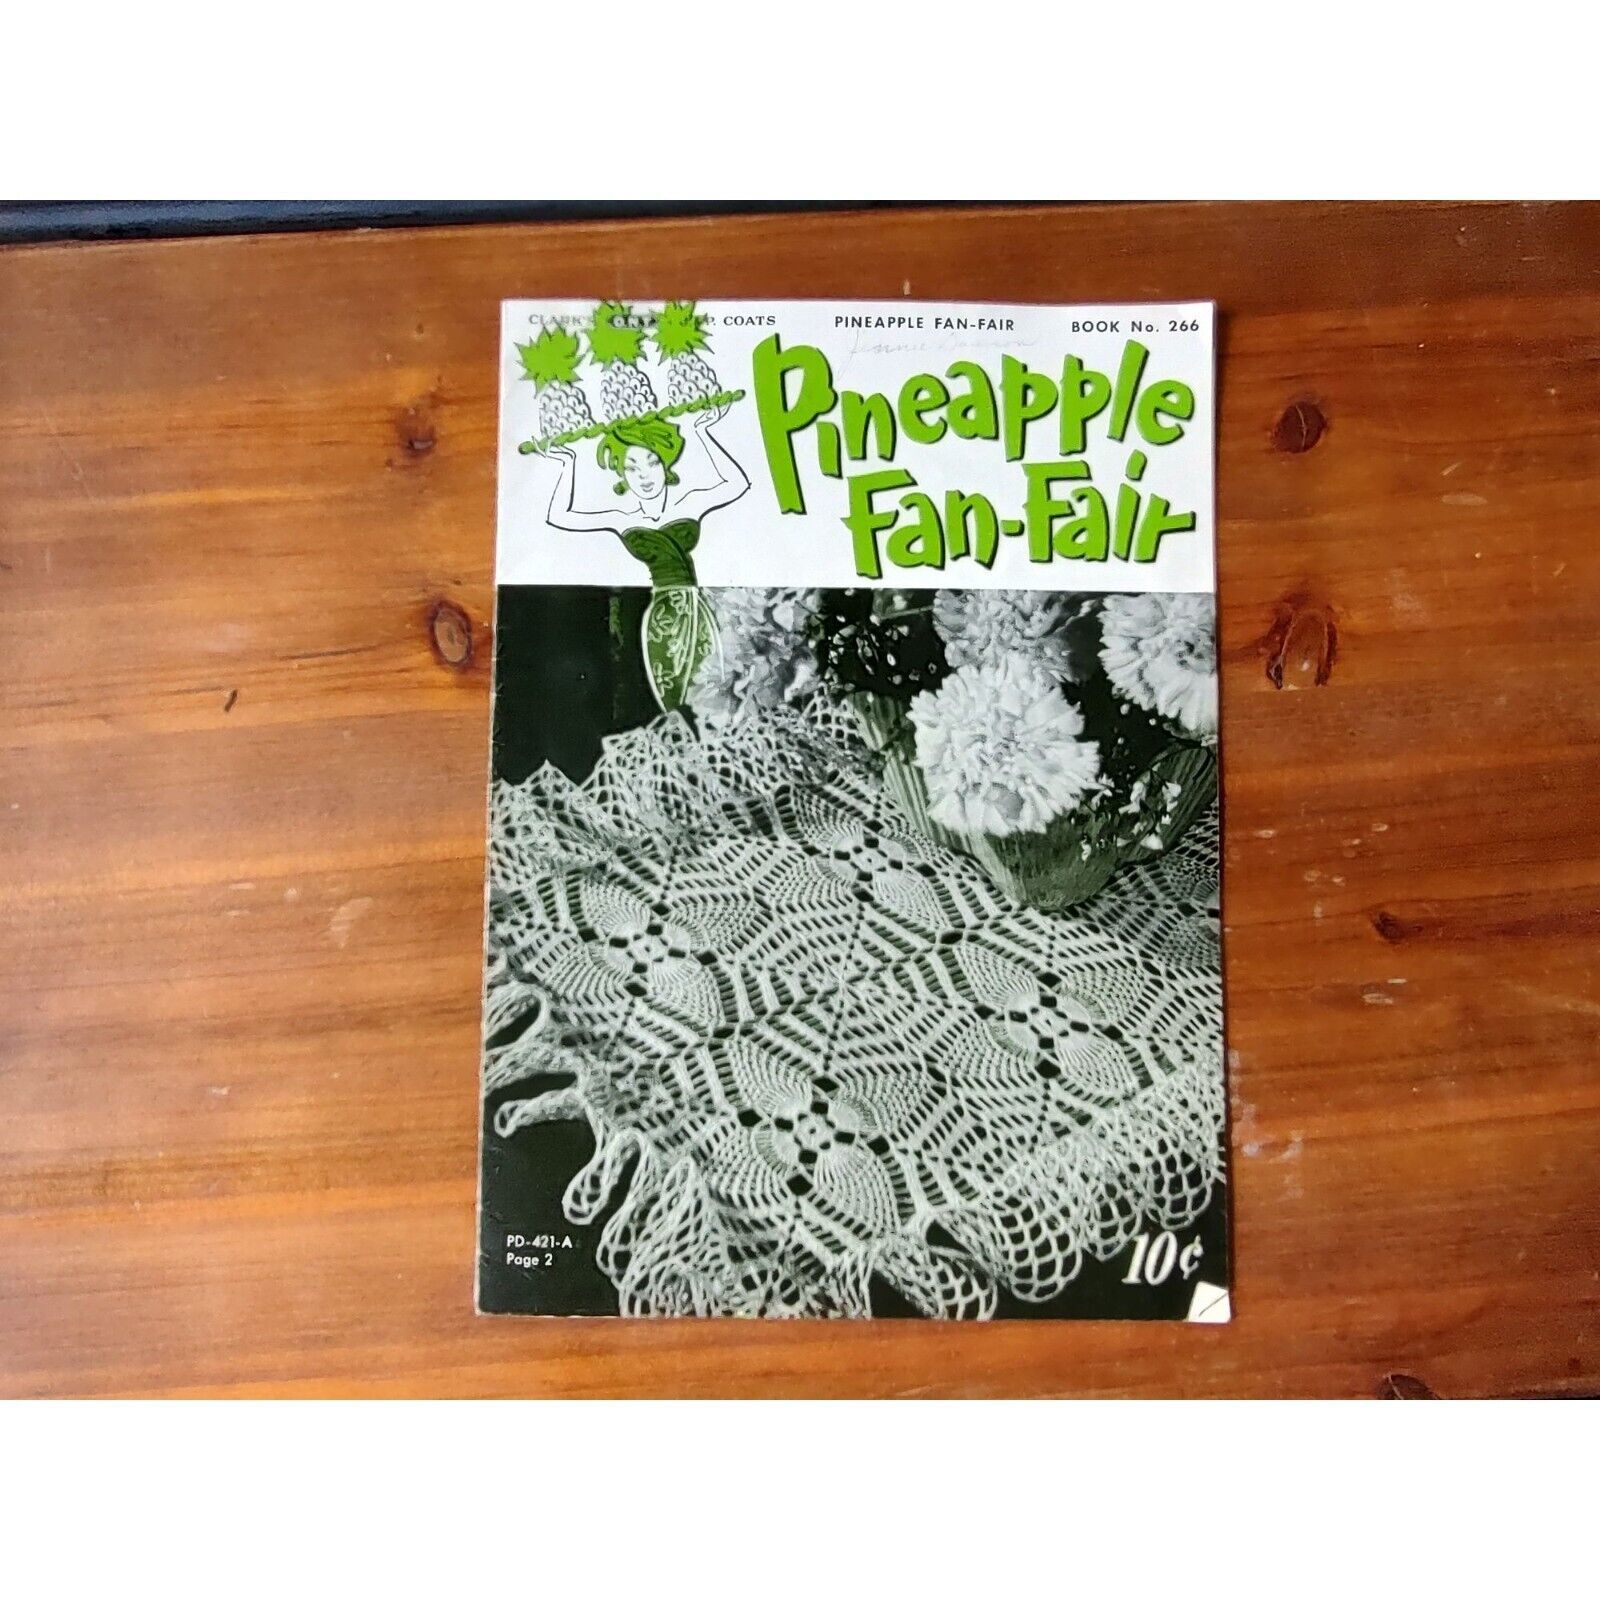 Clarks ONT J and P Coats Book No 266 Pineapple Fan Fair Crochet1950 10 Cent Book - $15.79